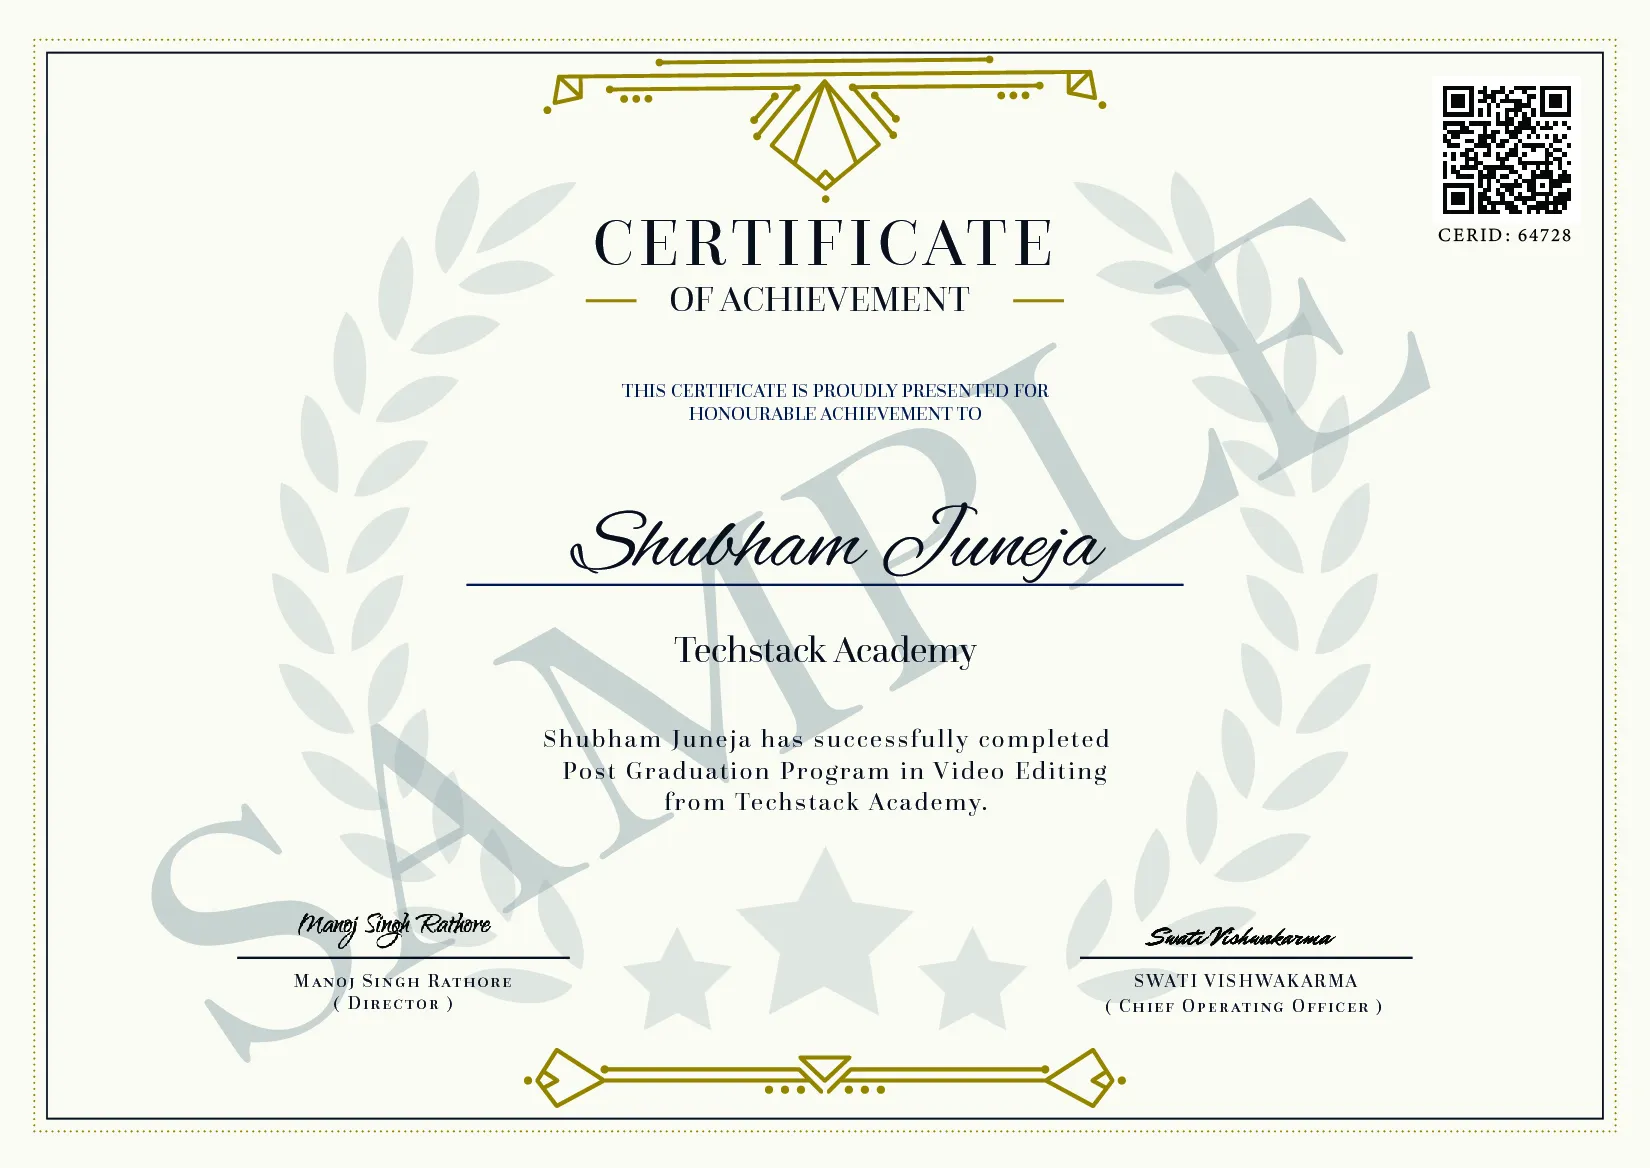 Post Graduation Program in Video Editing Course Certificate